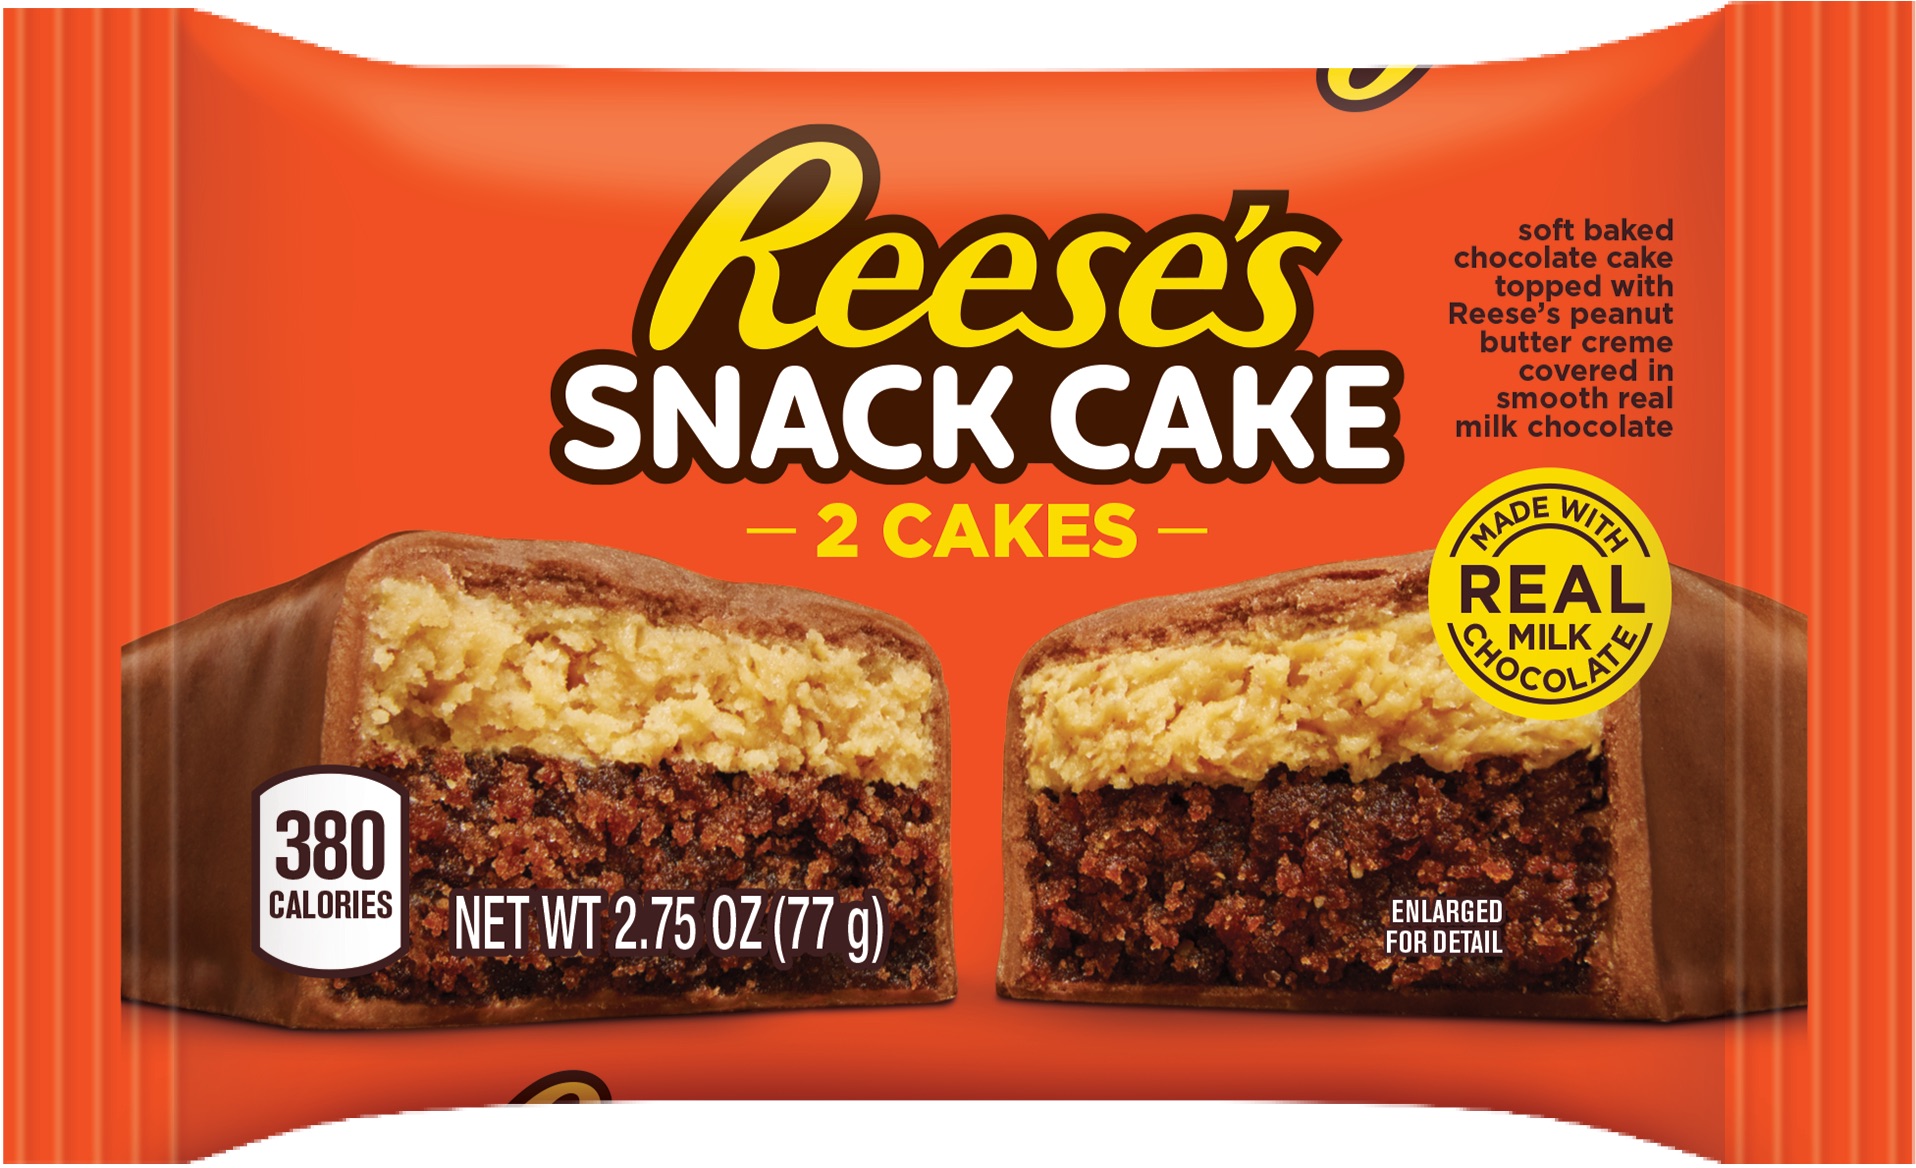 PHOTO: New Reese's snack cake will hit shelves in December 2020.